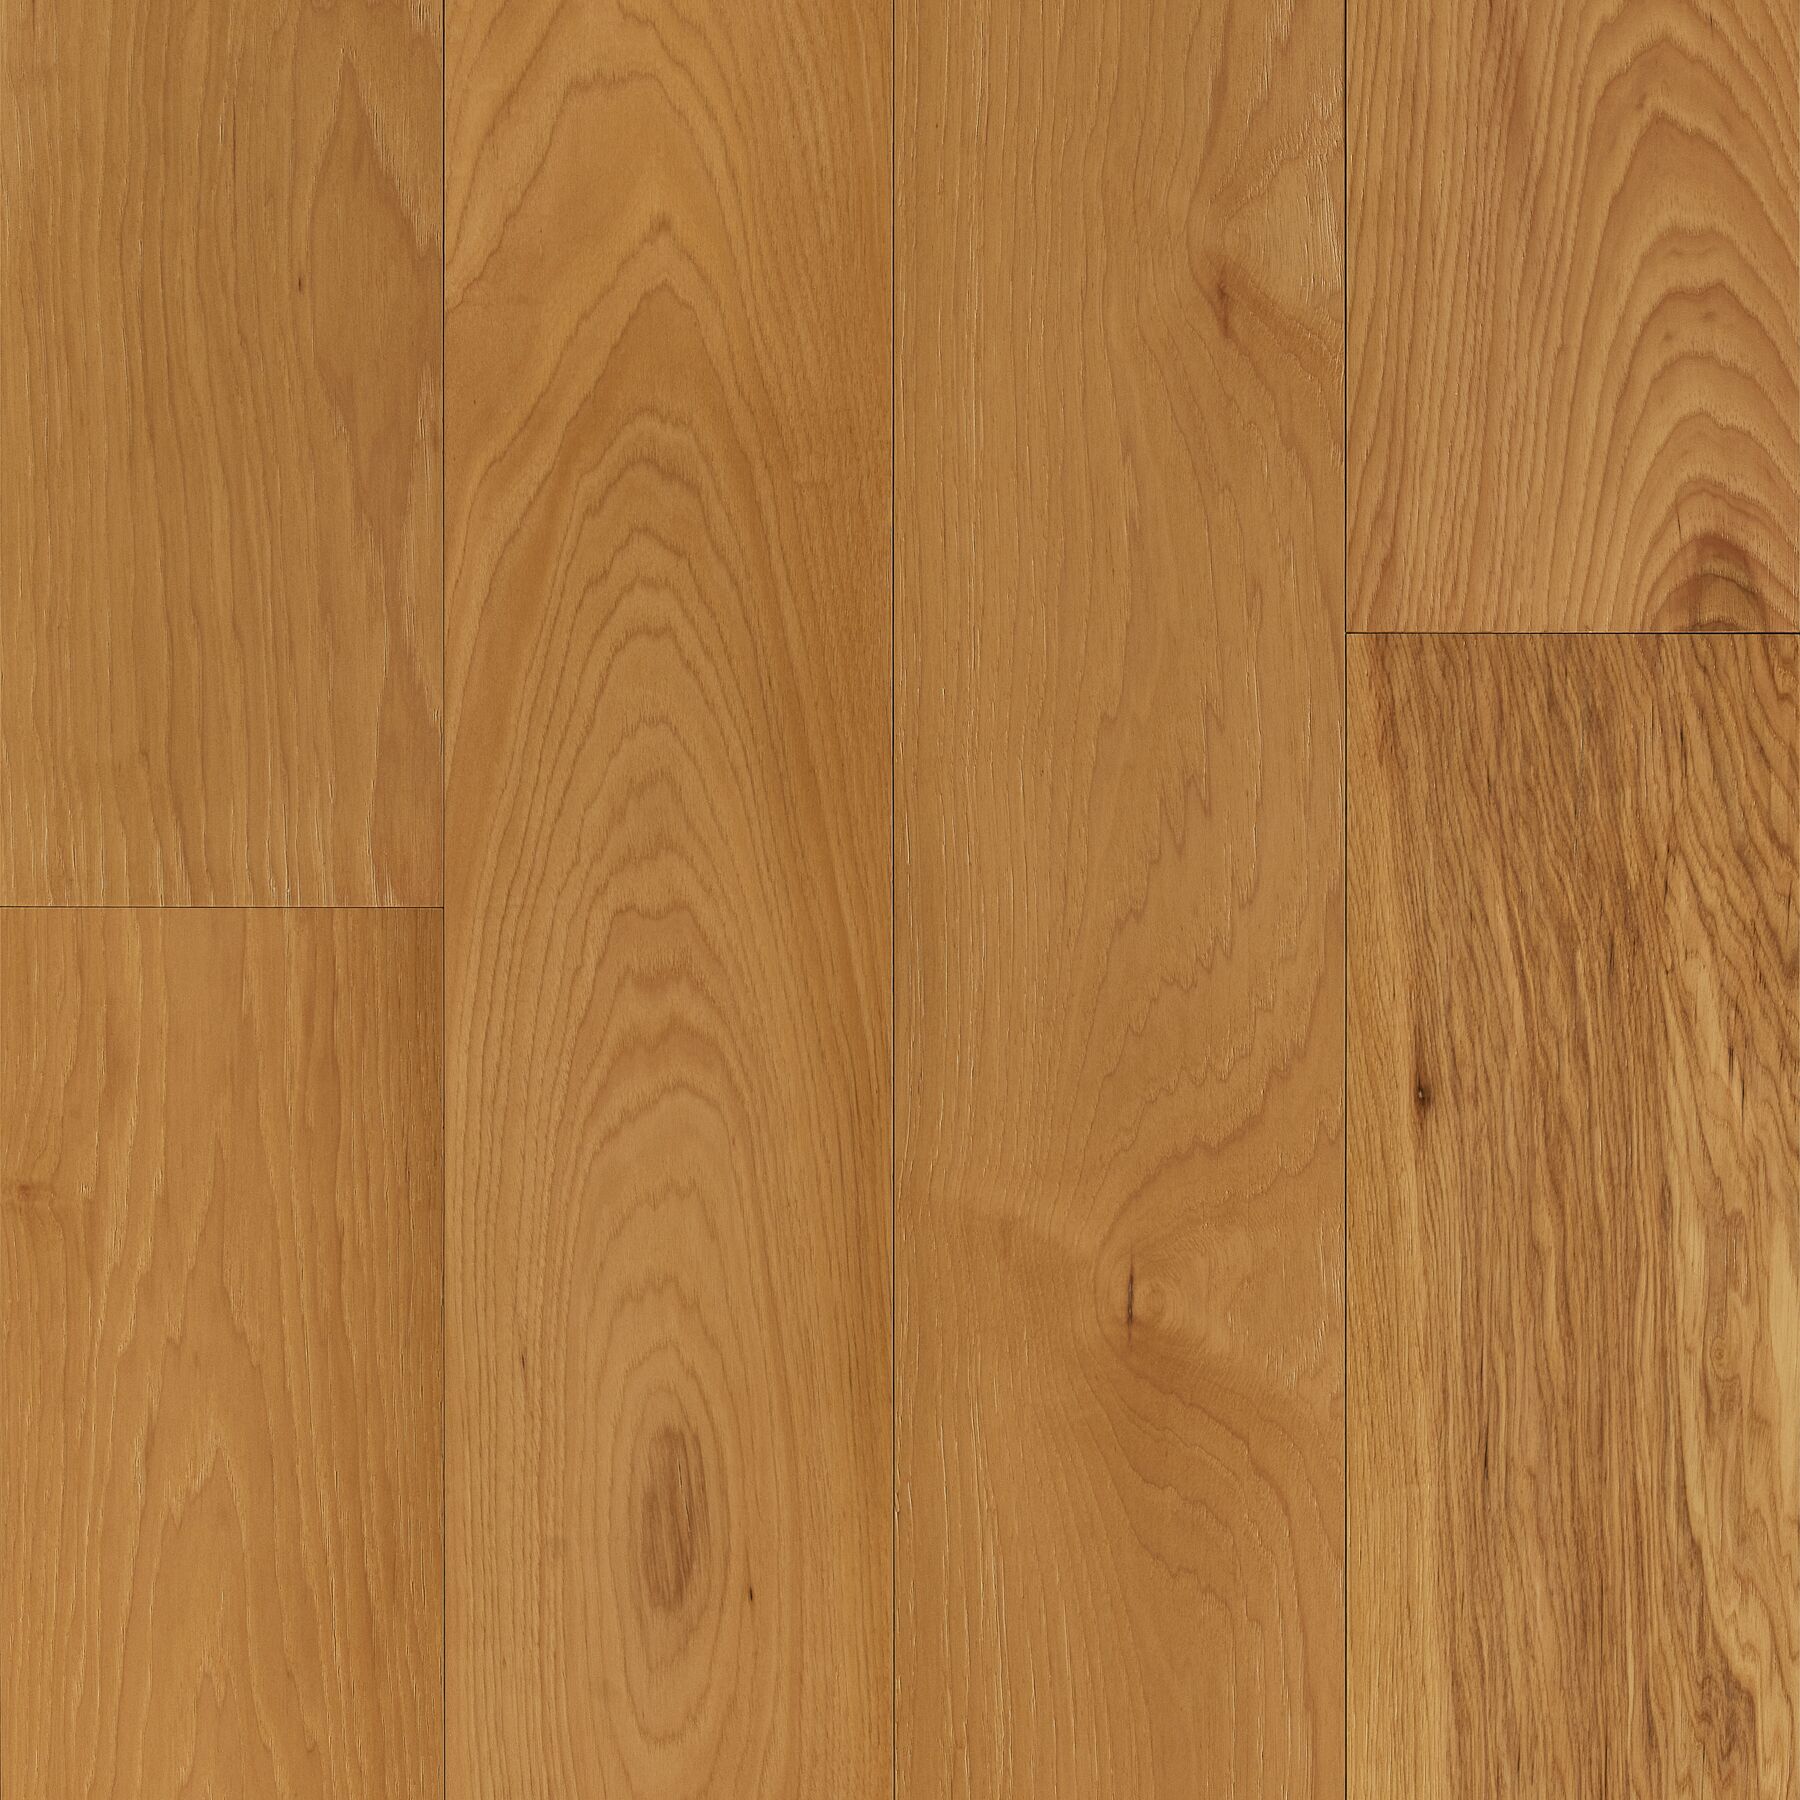 Auggie Dogwood Densified Wood Flooring with hardened wood for dog proof hardwood floors